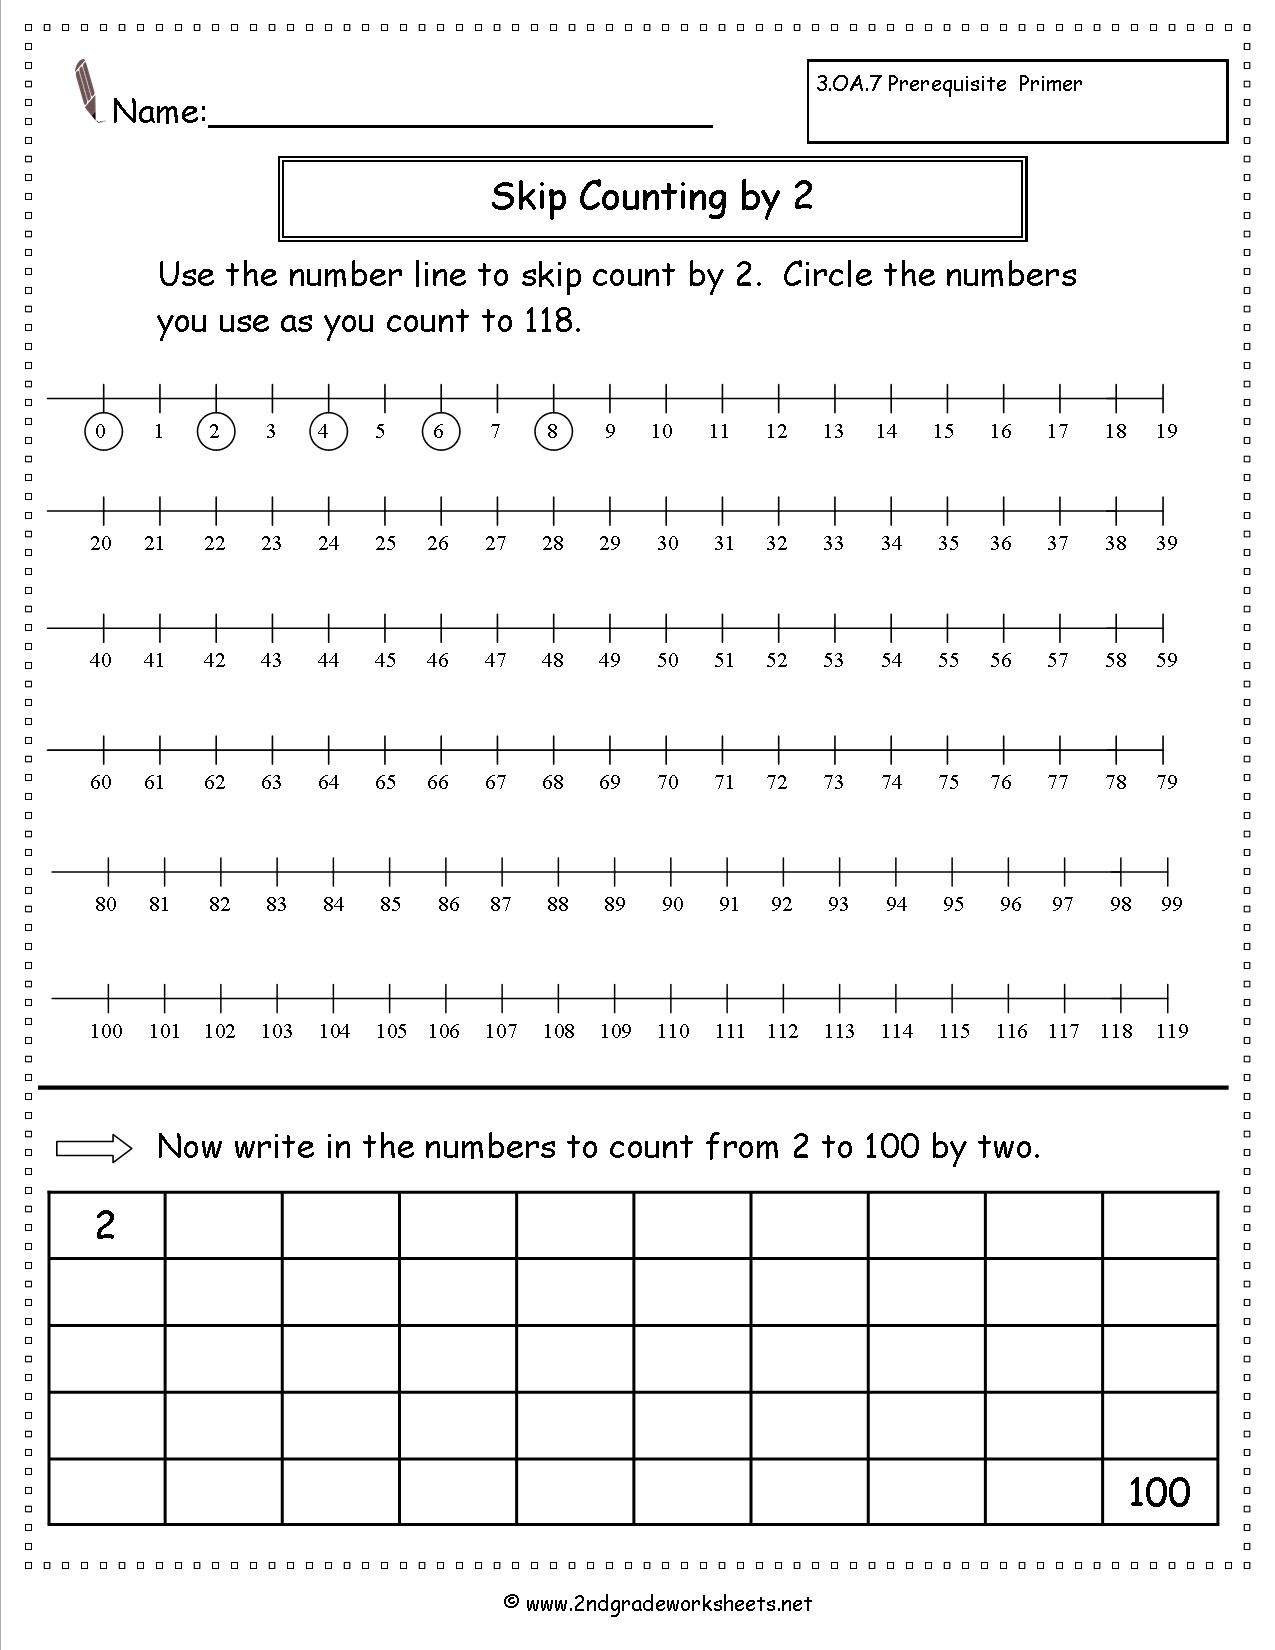 Free Skip Counting Worksheets - Free Printable Skip Counting Worksheets